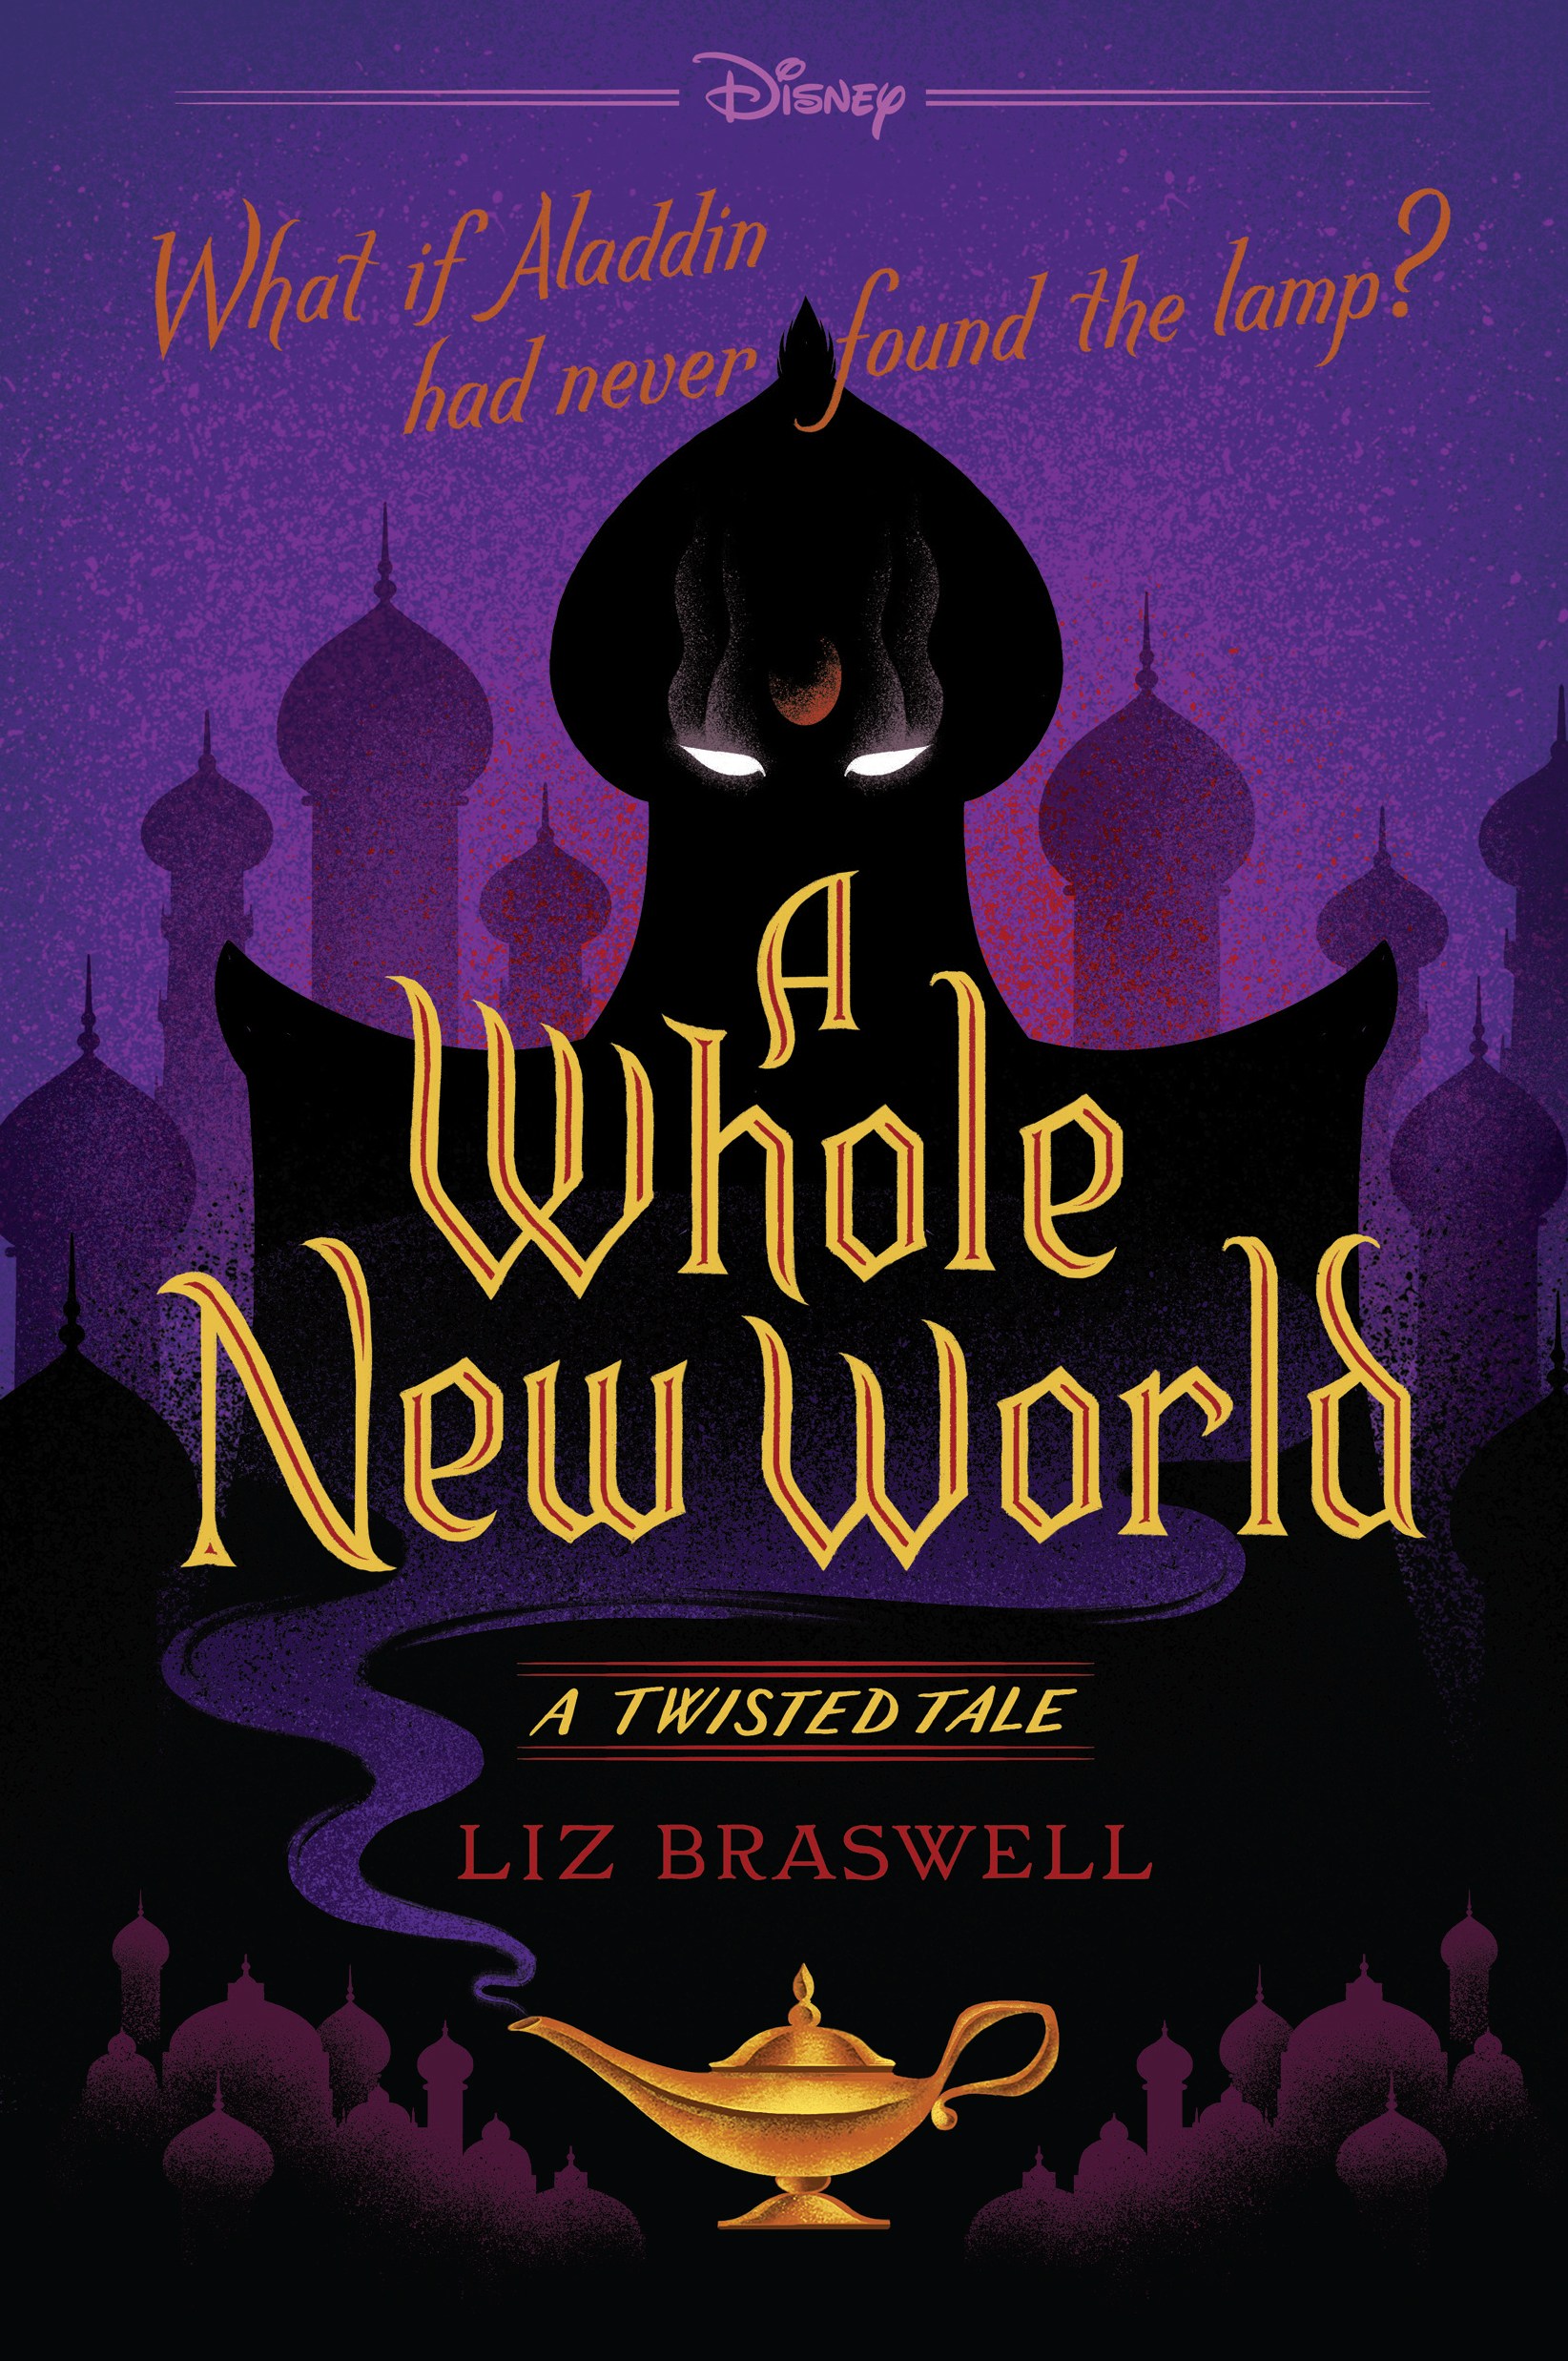 A Twisted Tale Book Series Disney Wiki Fandom